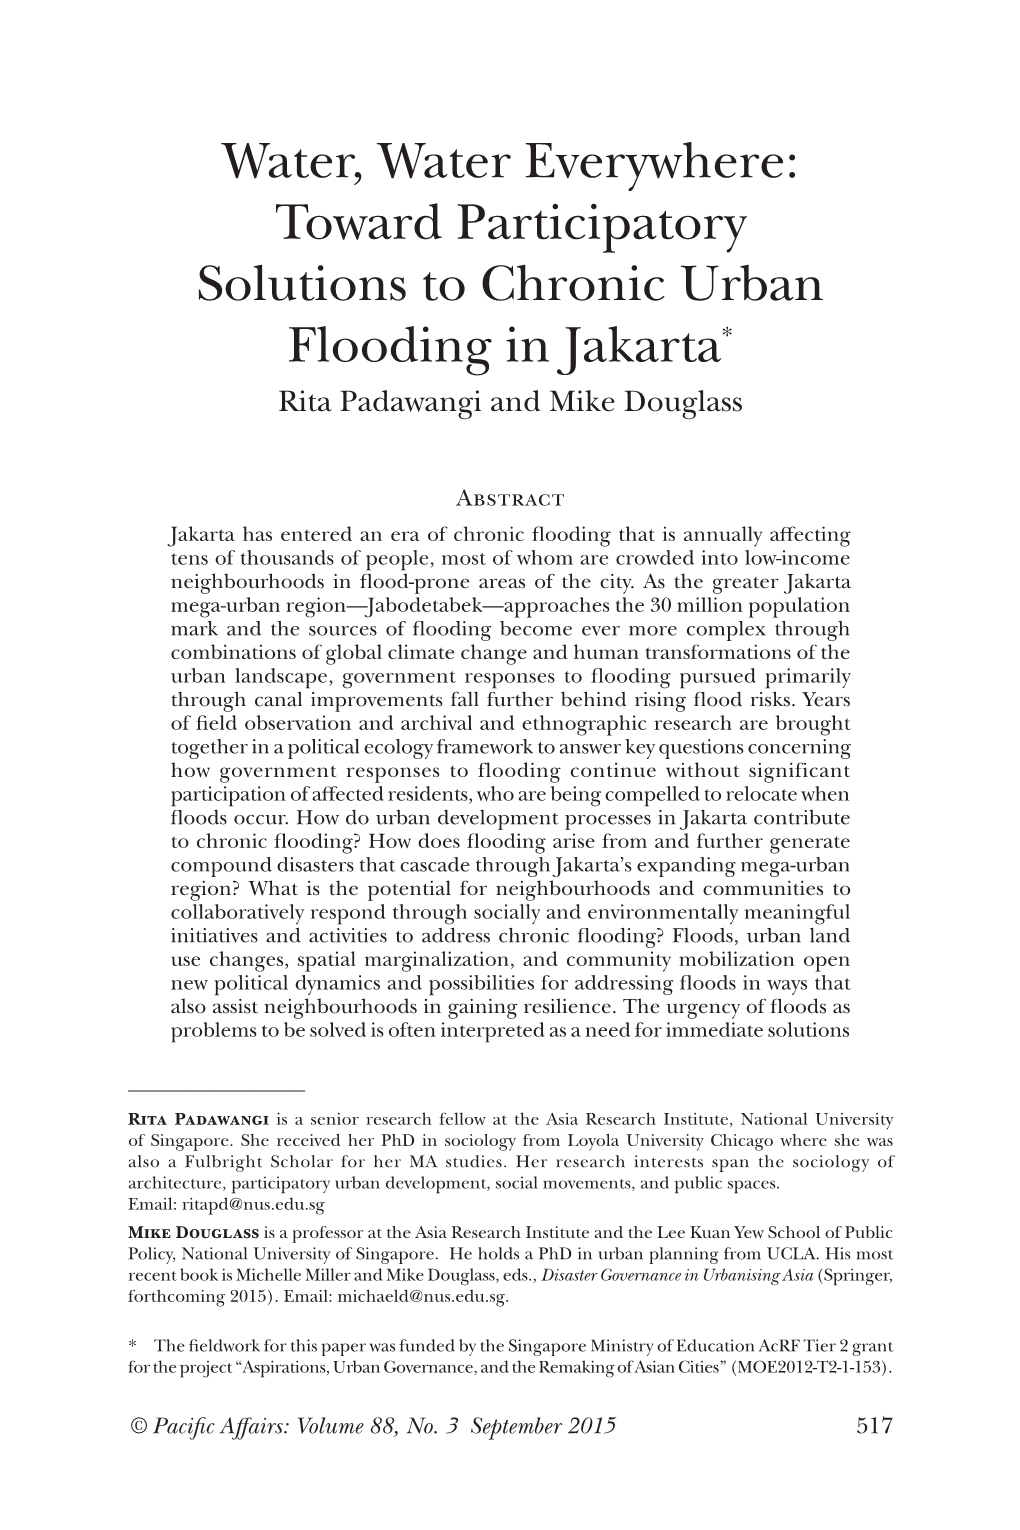 Toward Participatory Solutions to Chronic Urban Flooding in Jakarta* Rita Padawangi and Mike Douglass